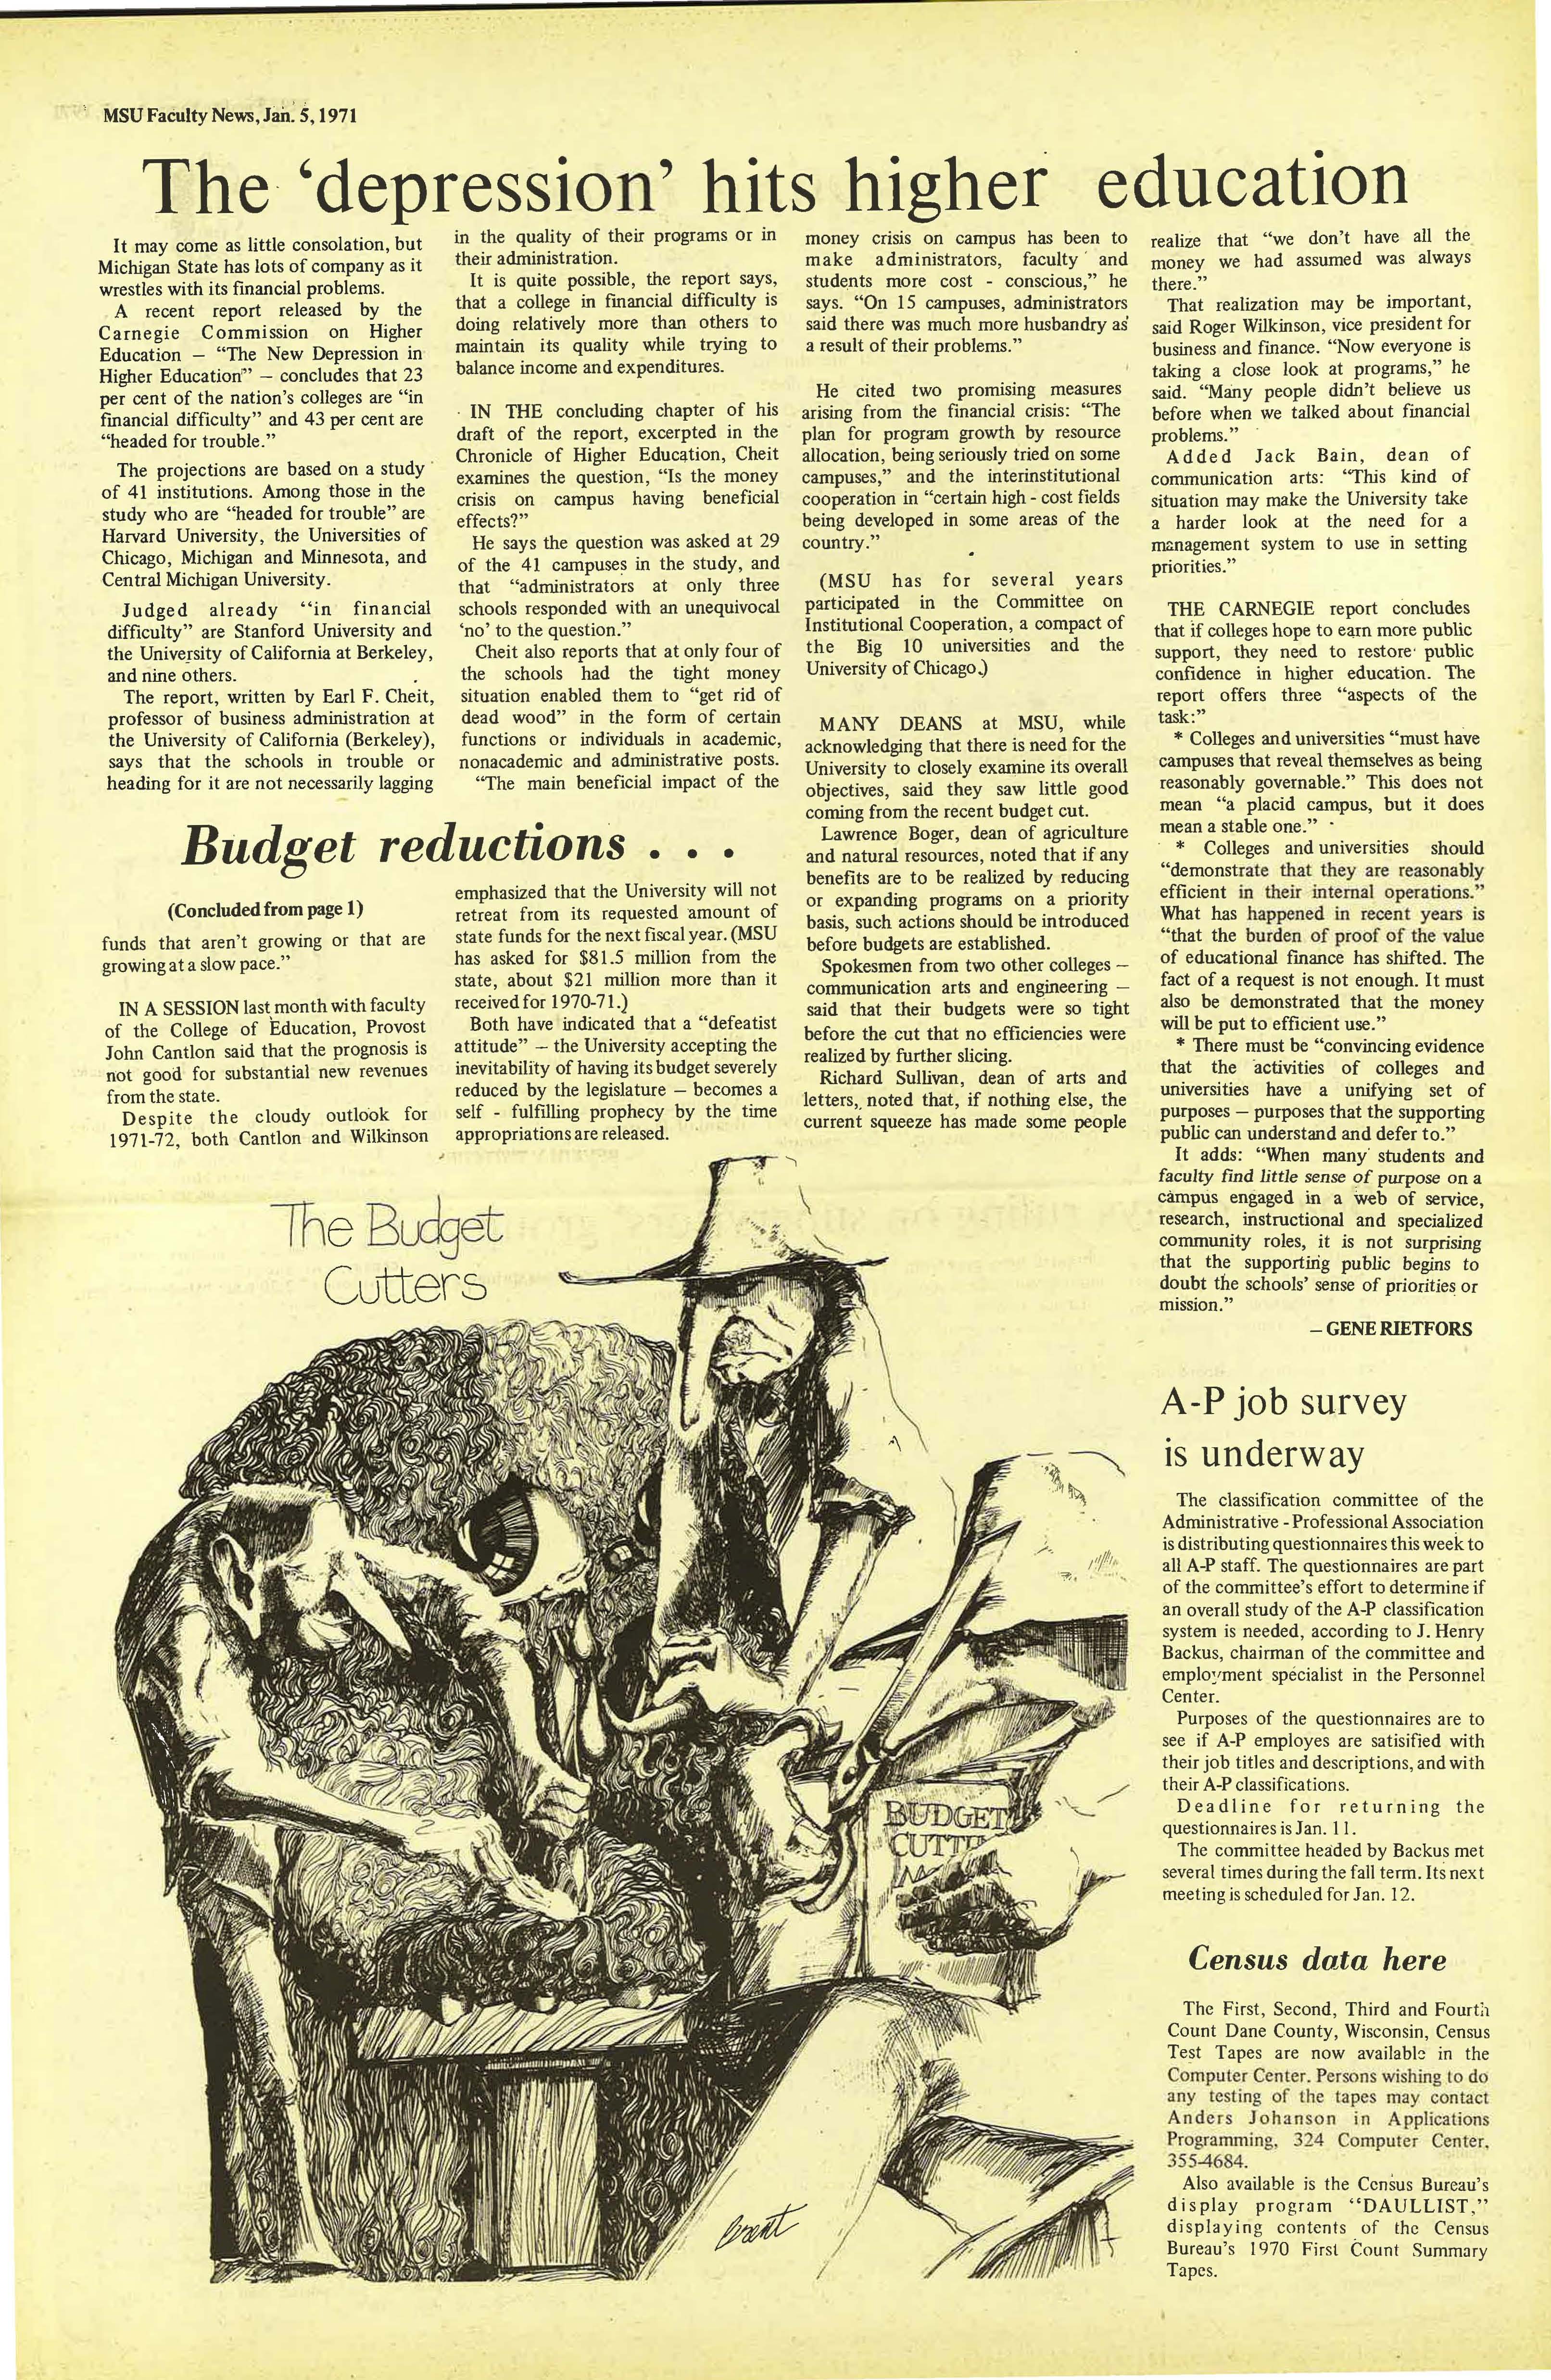 MSU News Bulletin, Vol. 2, No. 13, January 19, 1971